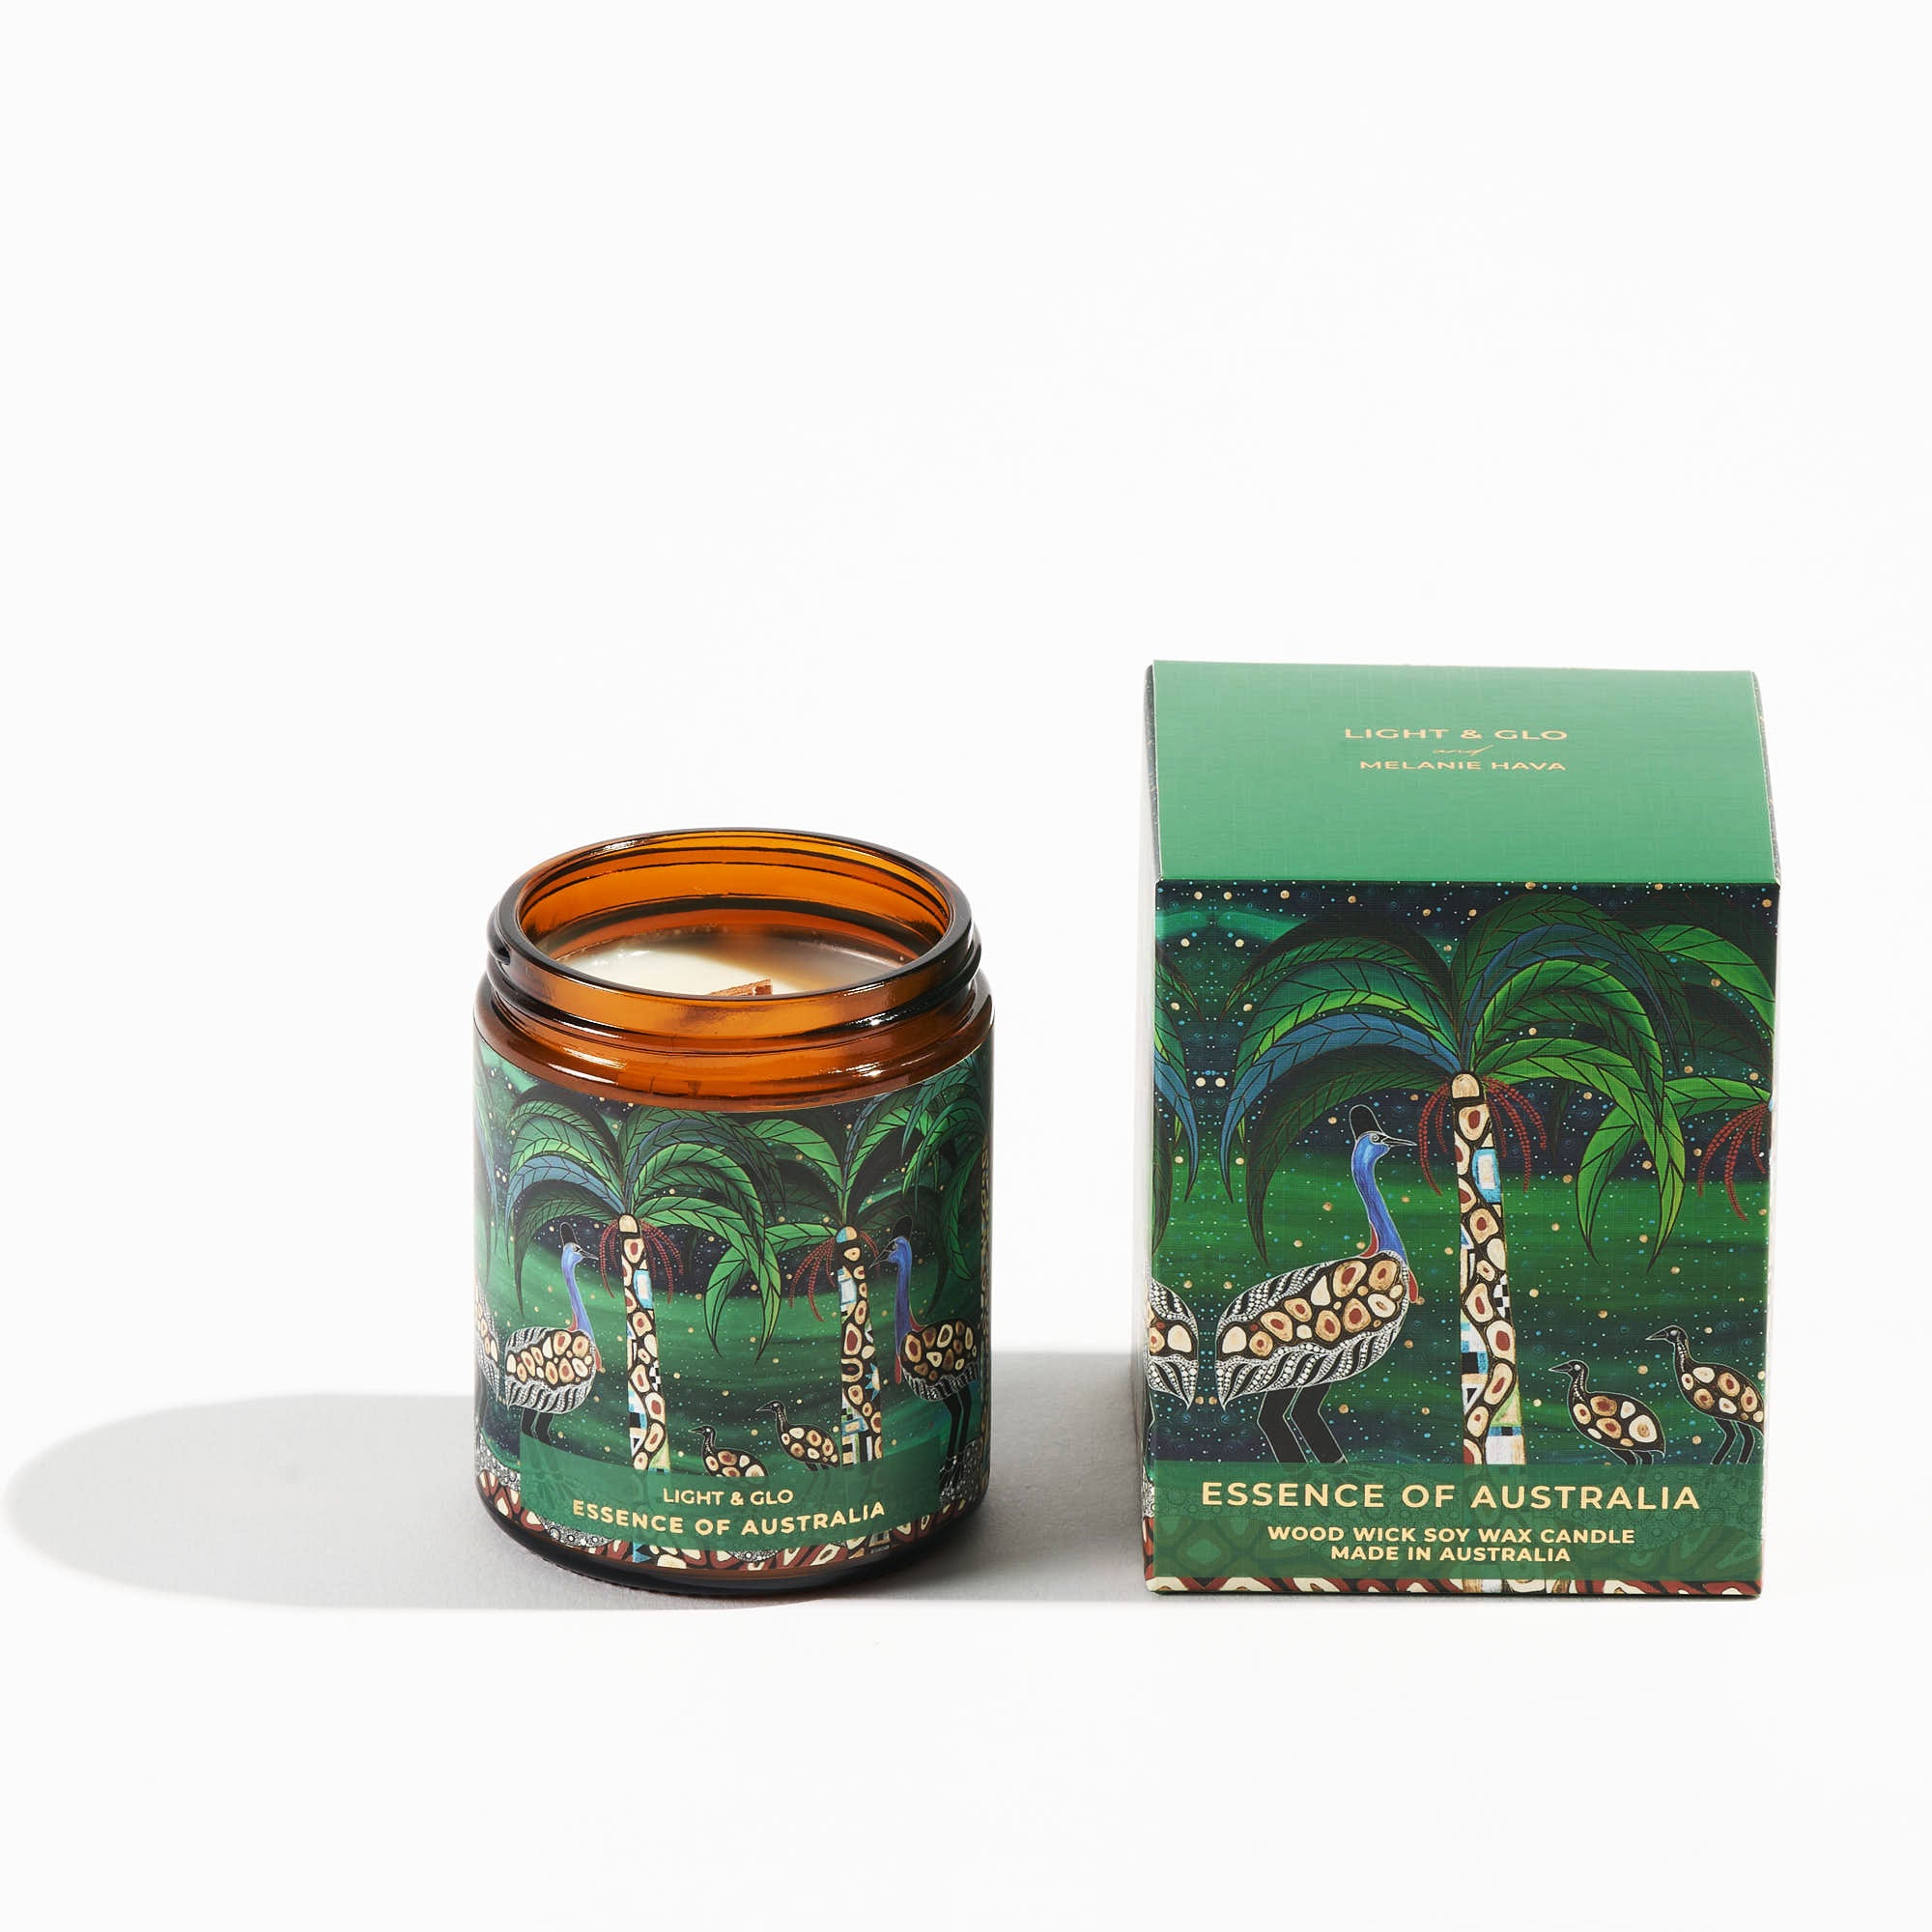 Soul Australiana - Essence of Australia | Luxury Candles & Home Fragrances by Light + Glo